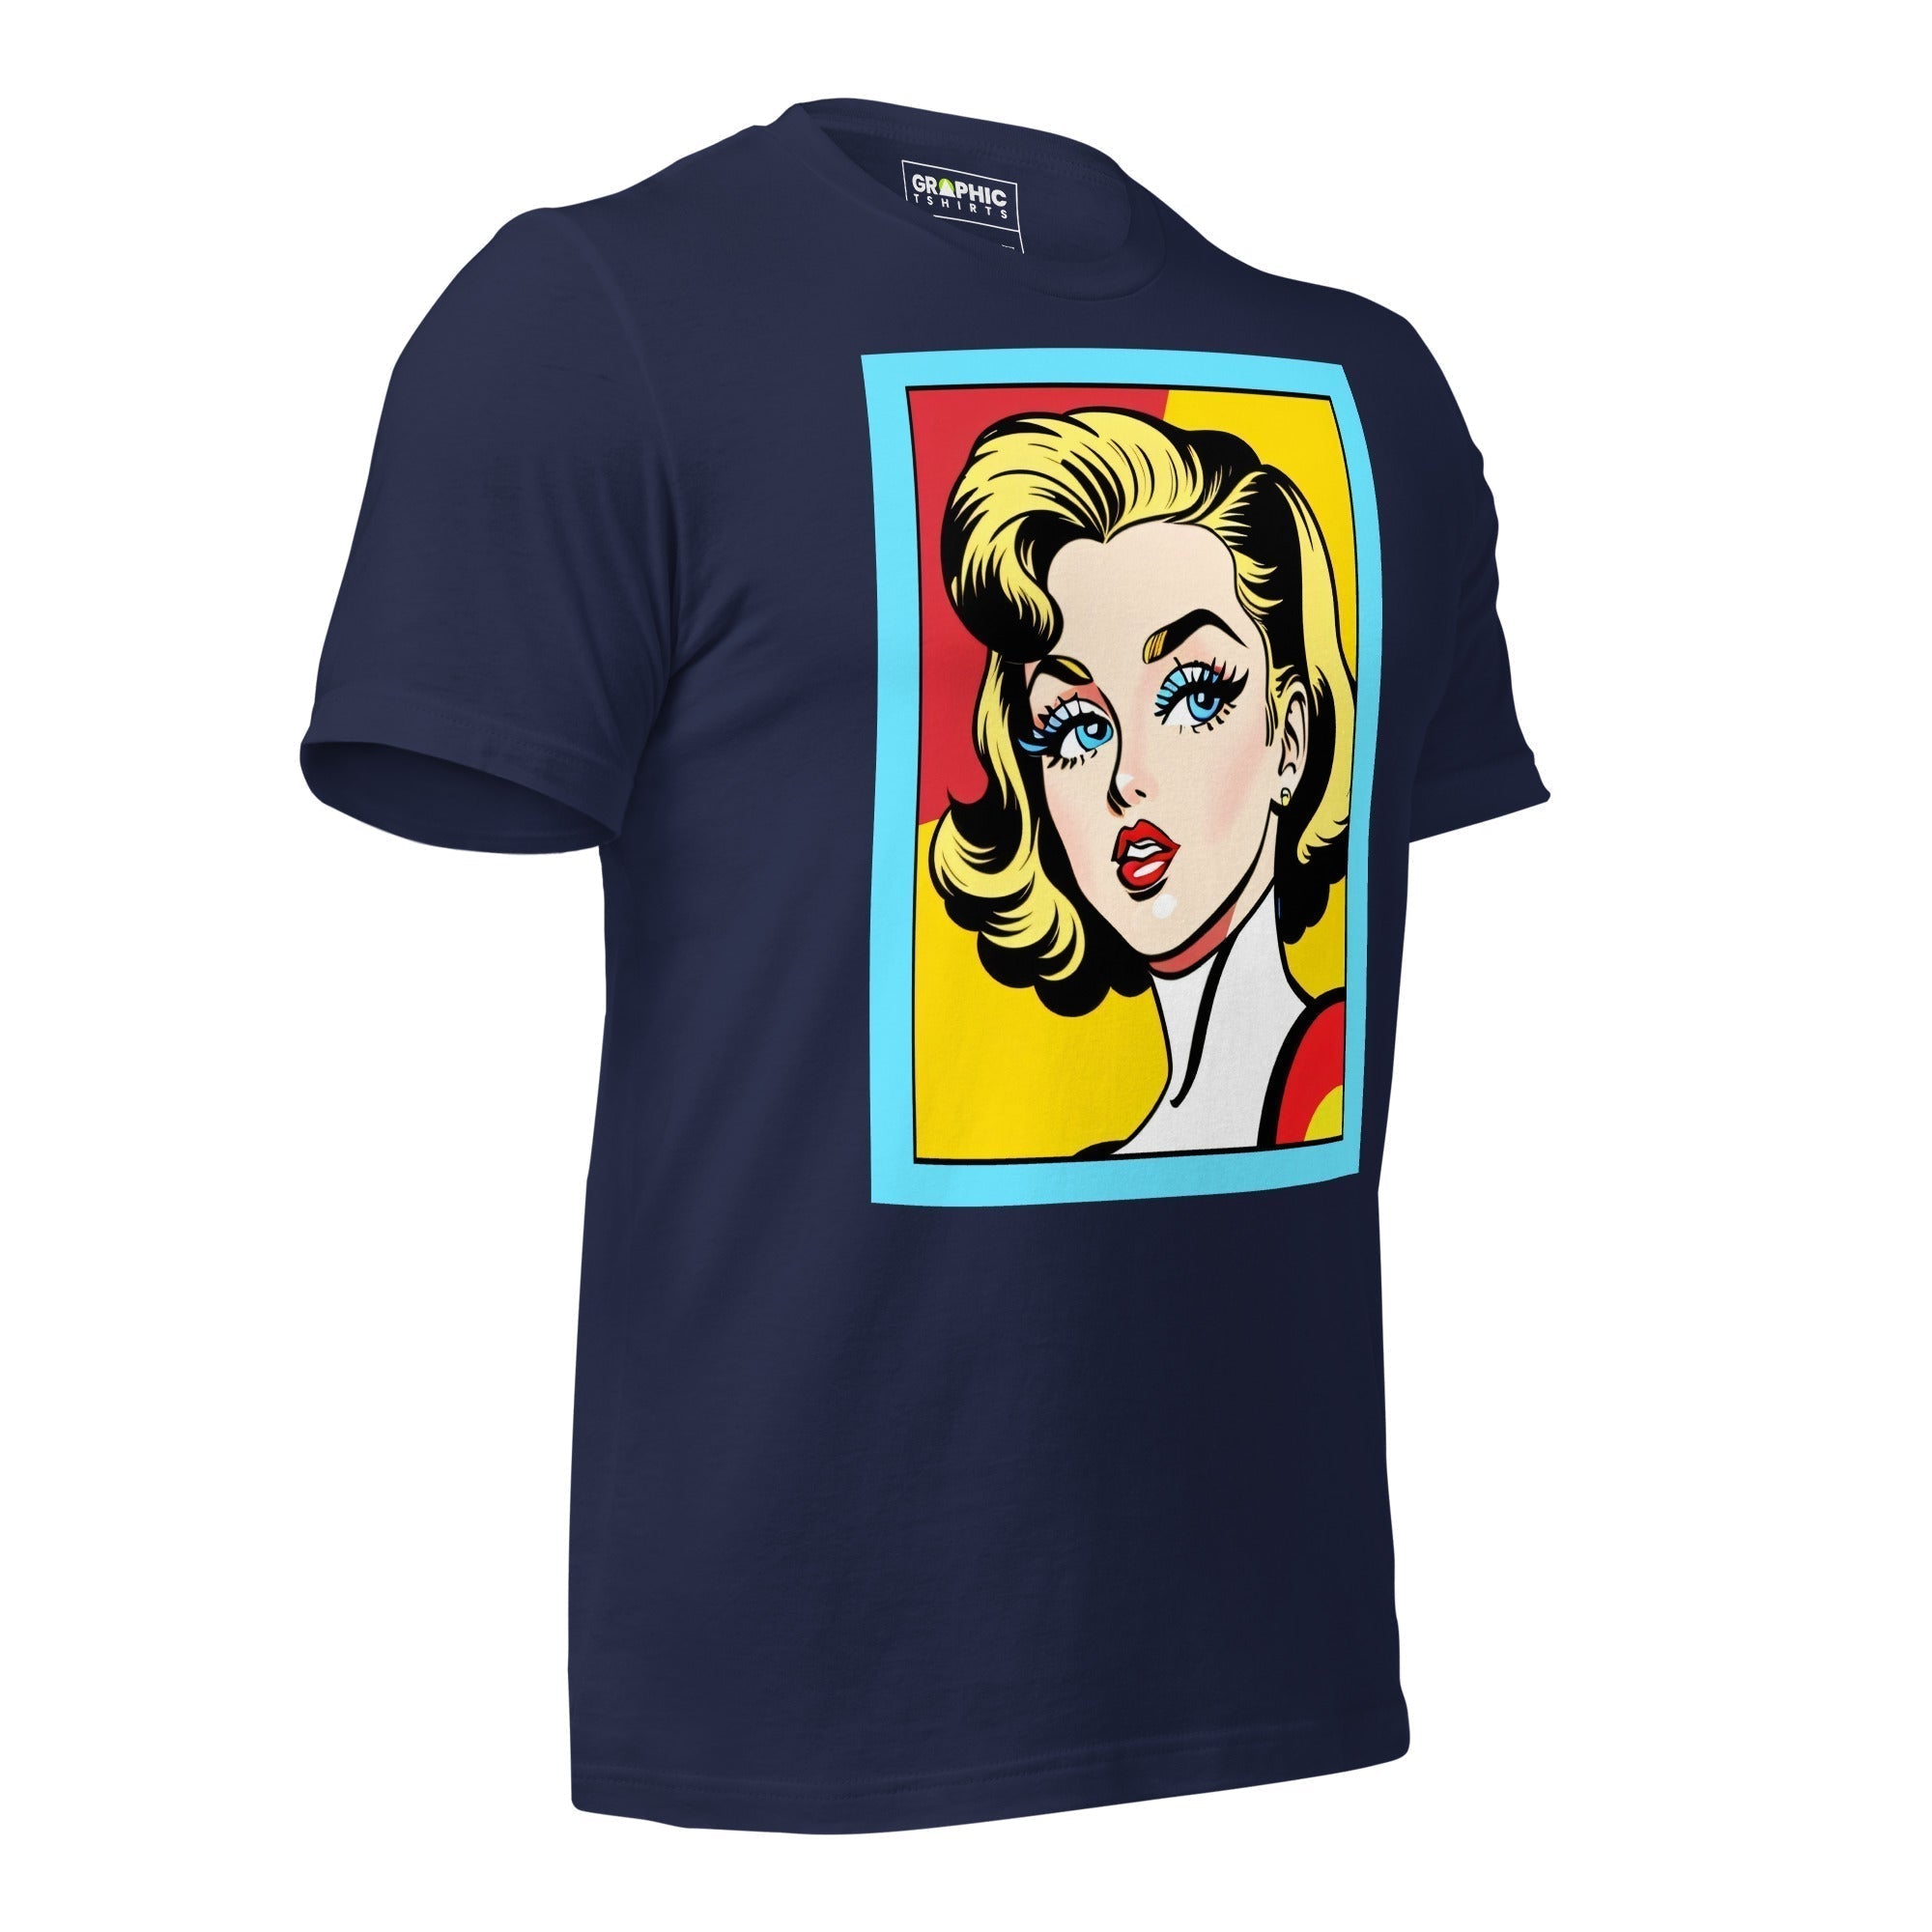 Unisex Crew Neck T-Shirt - Vintage American Comic Series v.50 - GRAPHIC T-SHIRTS